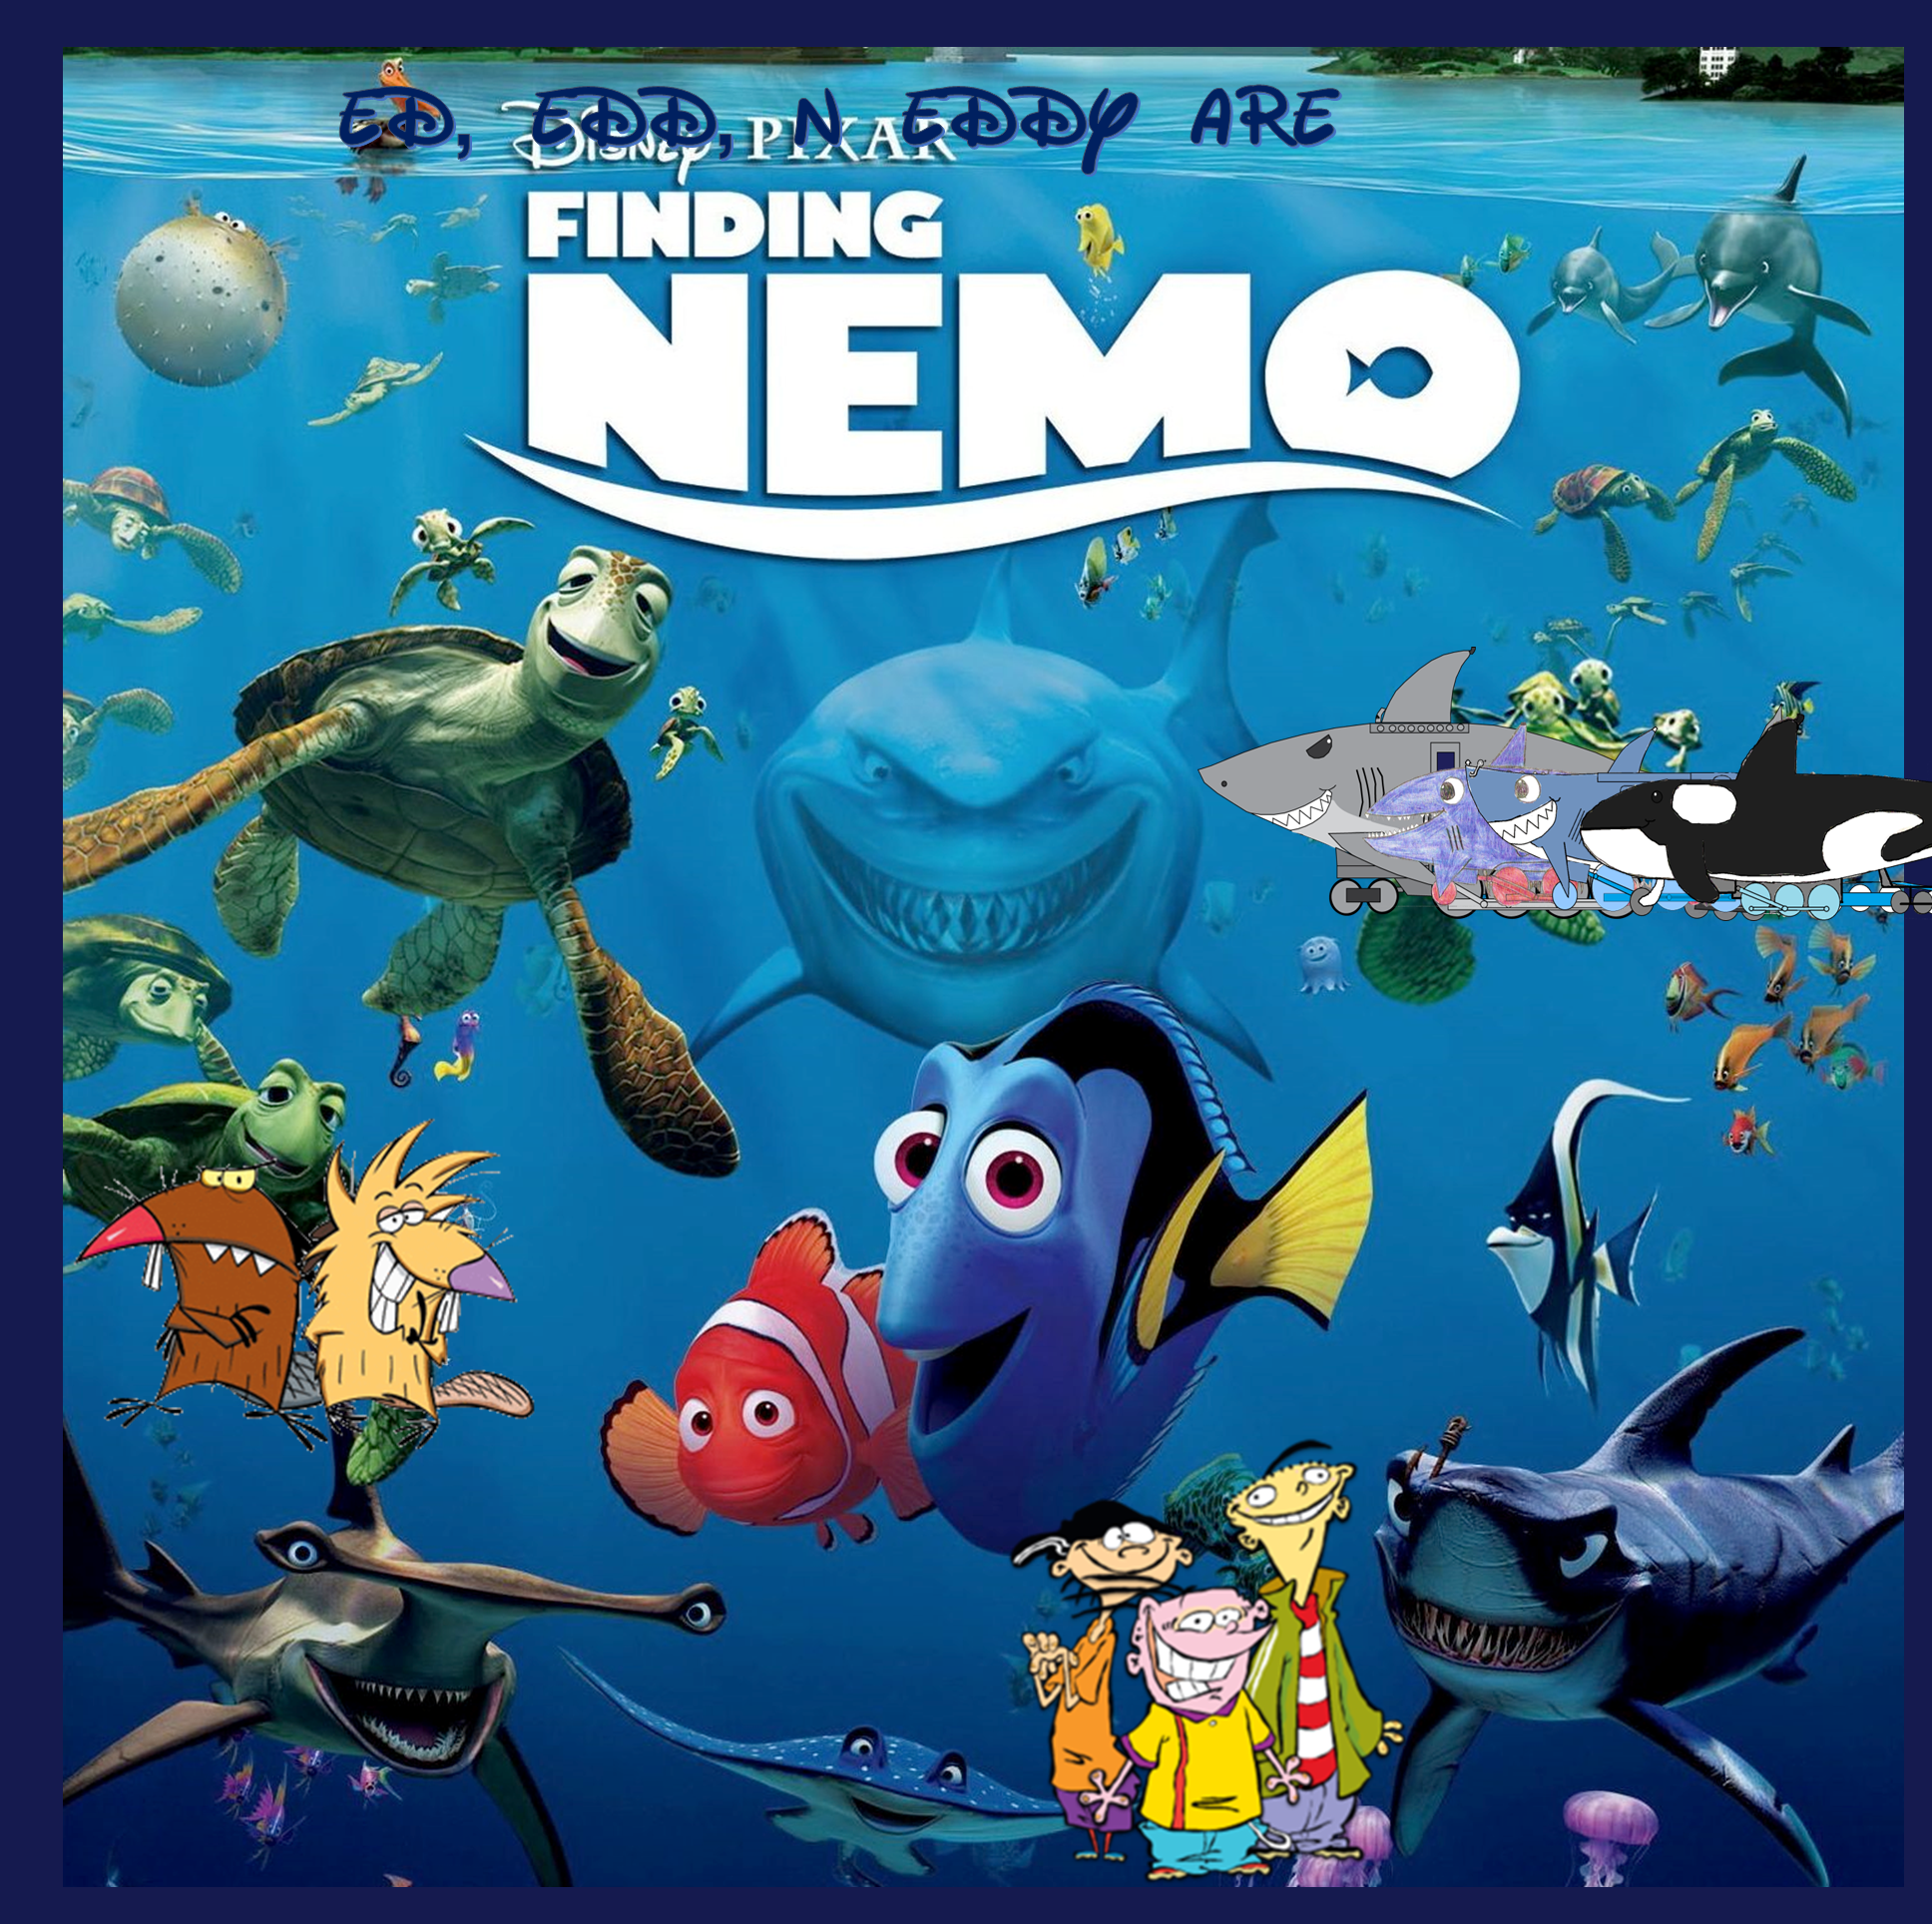 Ed, Edd, n Eddy are Finding Nemo  Pooh's Adventures Wiki 